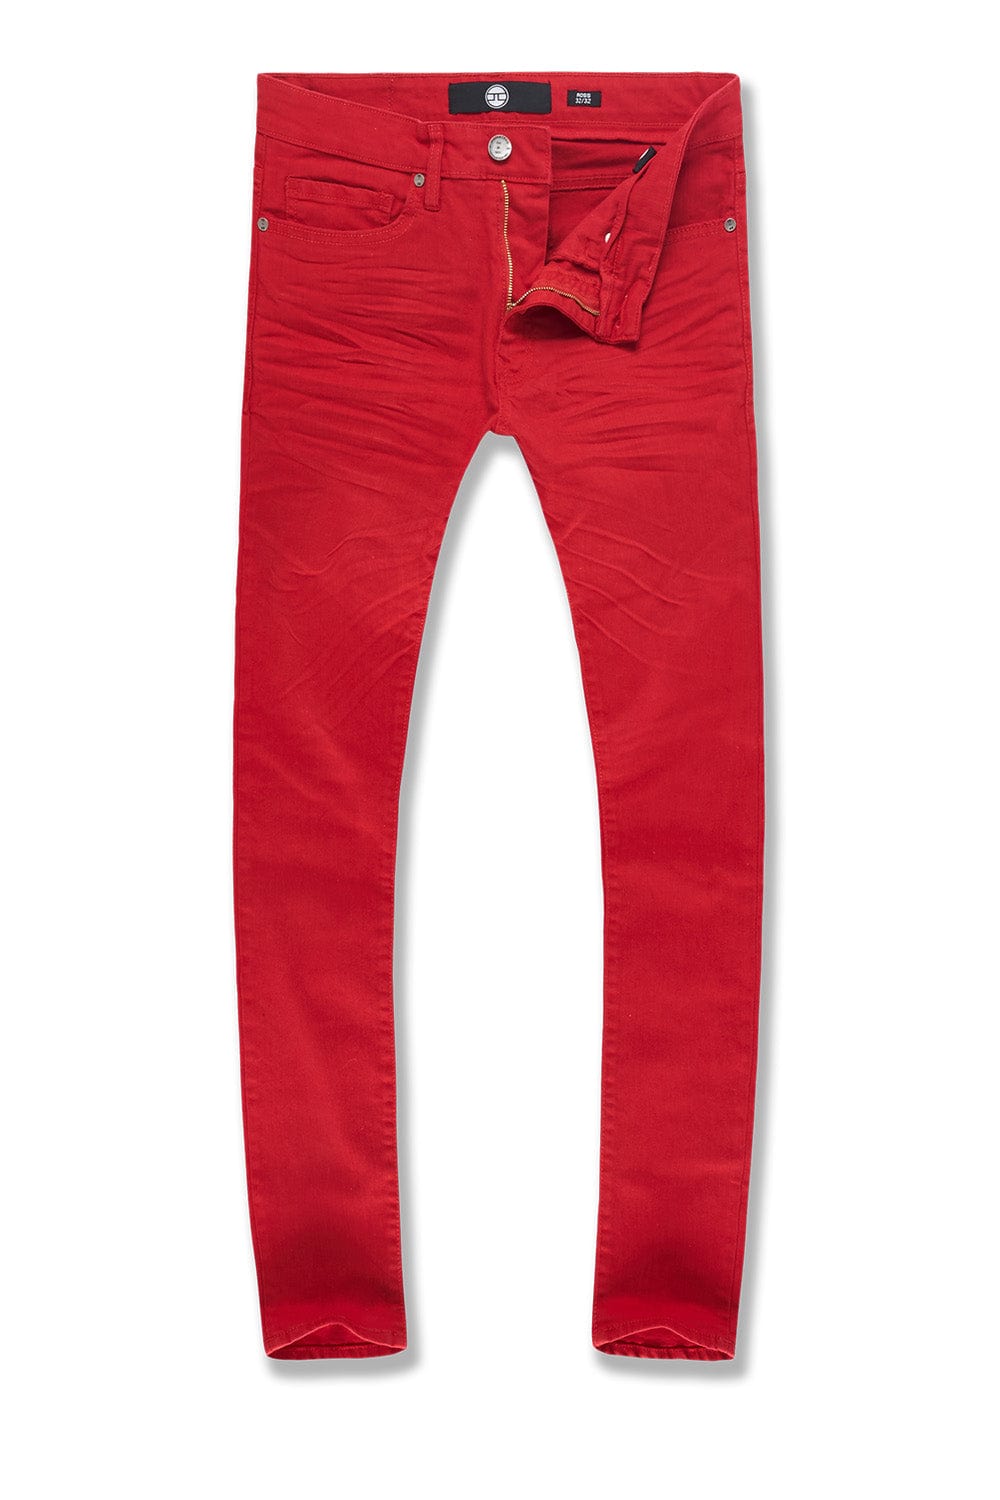 Jordan Craig Ross - Pure Tribeca Twill Pants (Red) Red / 28/32